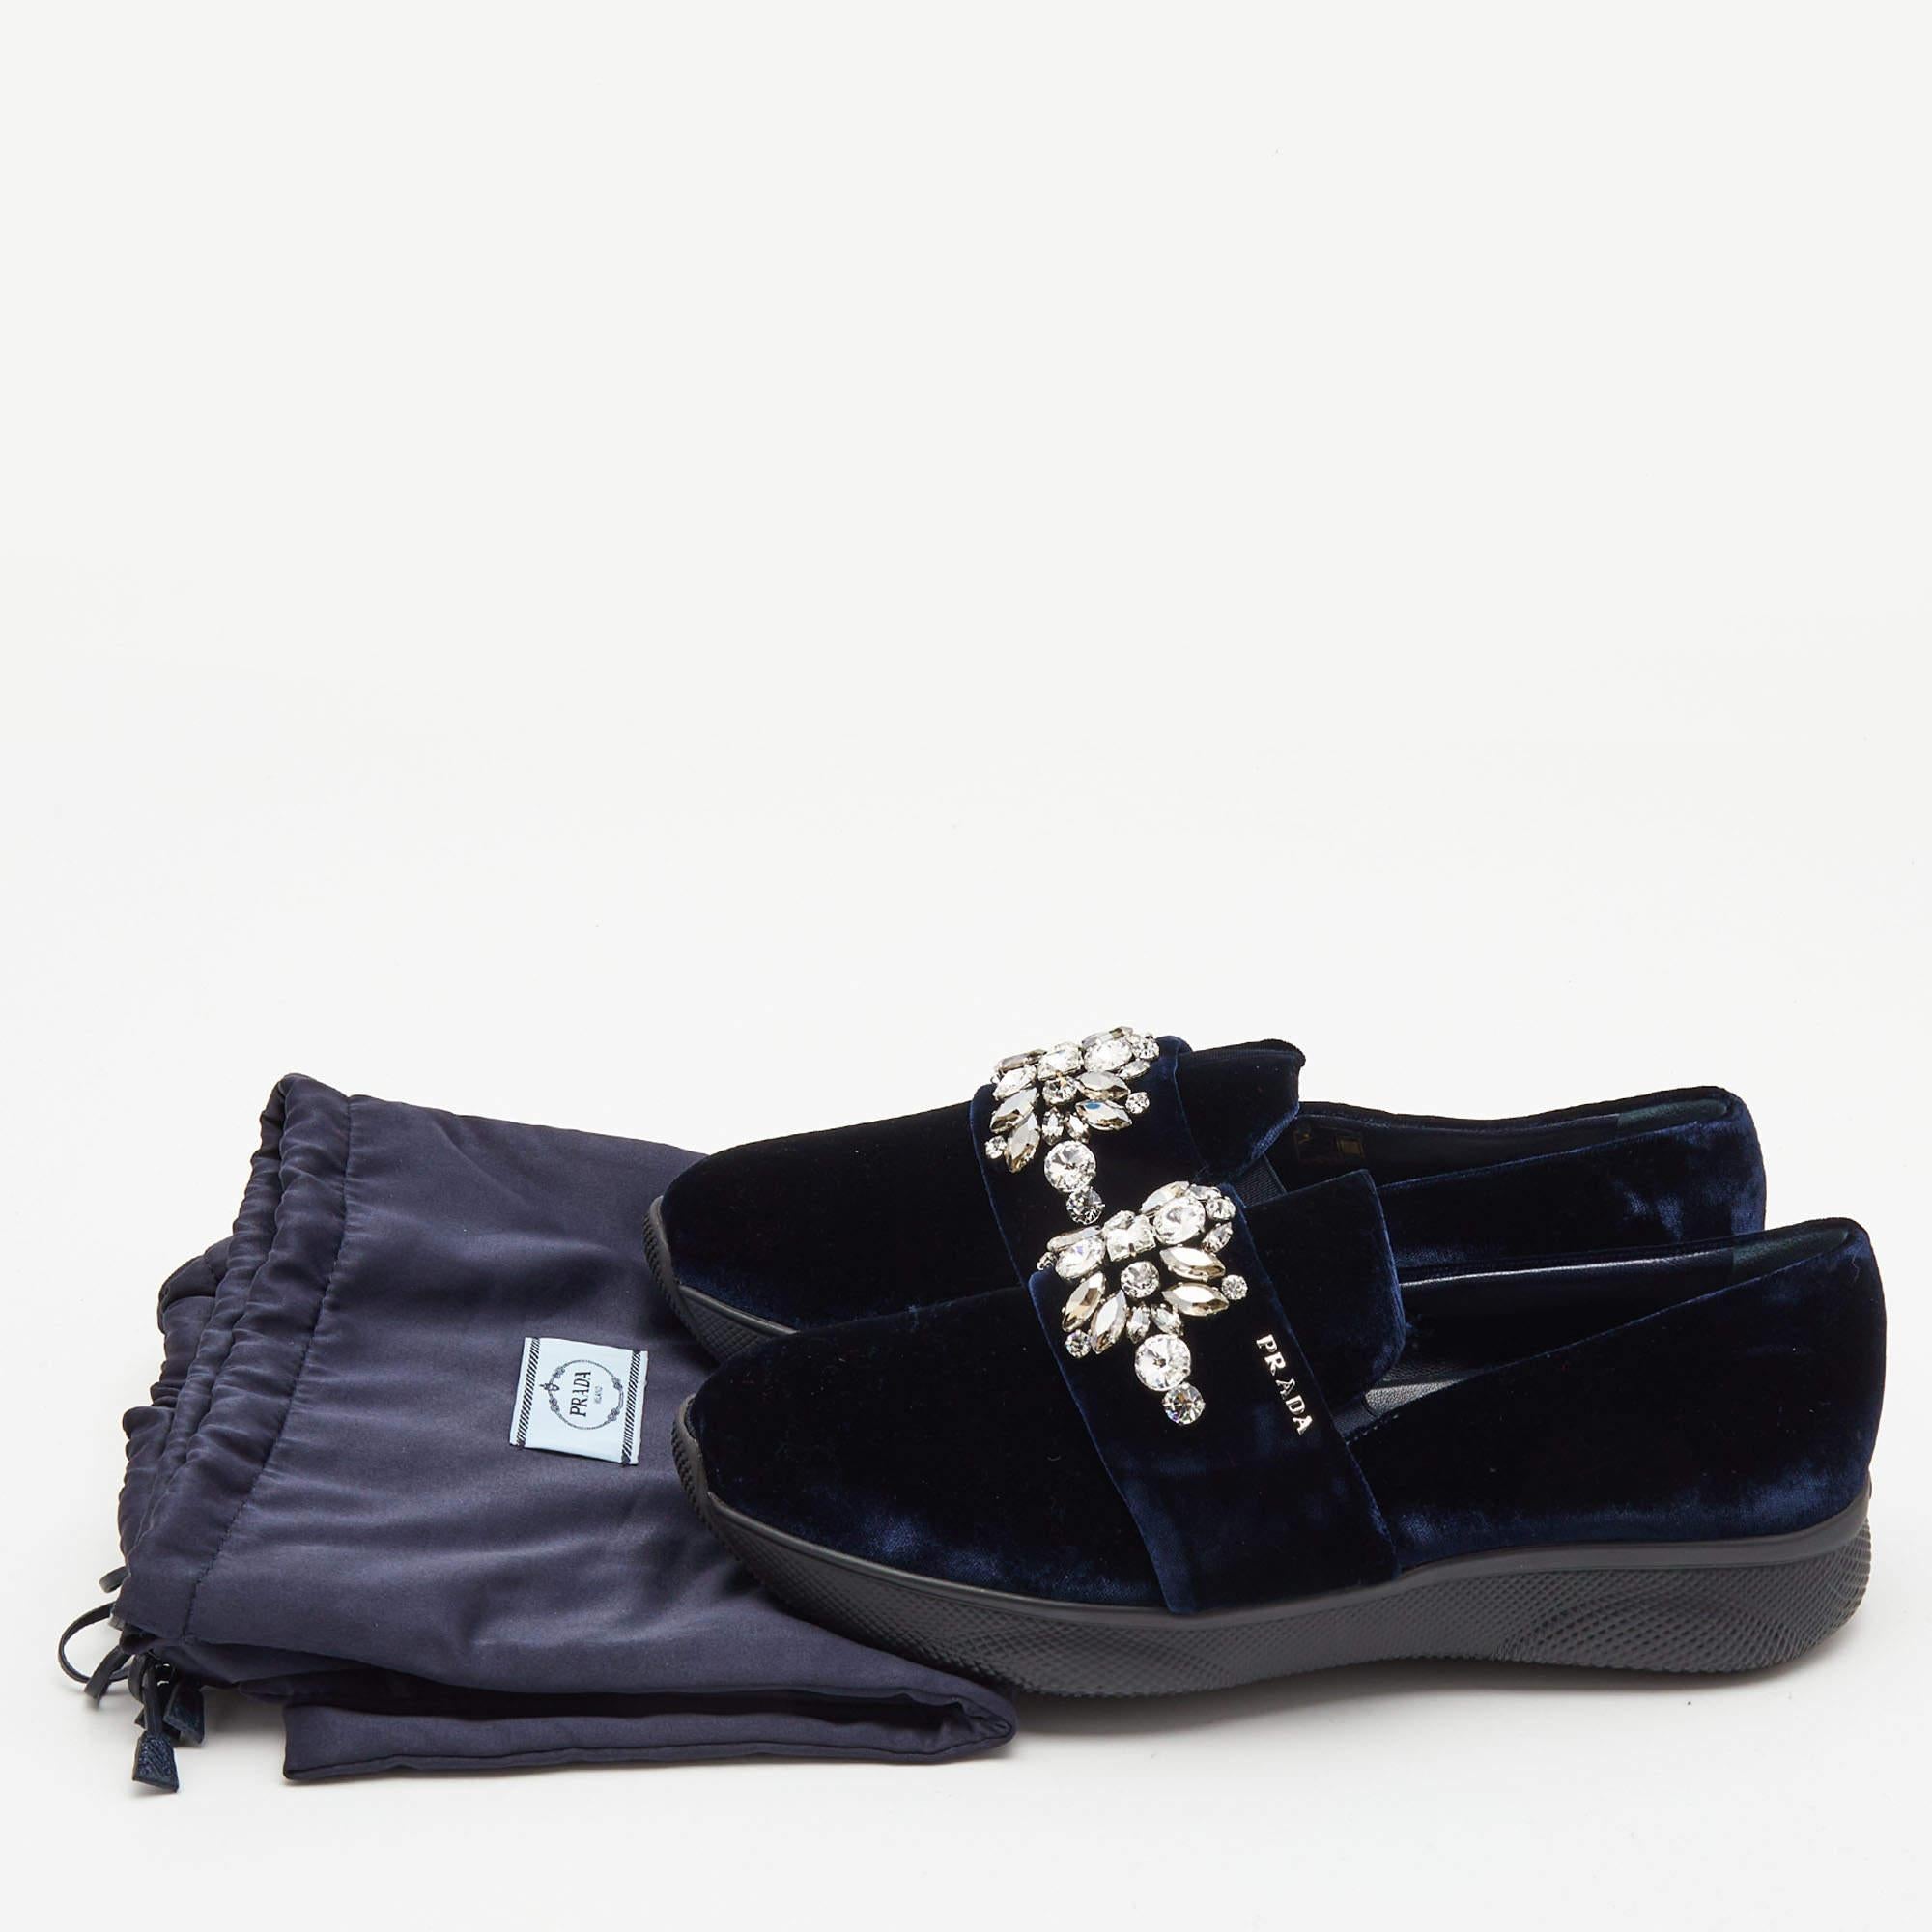 Prada Navy Blue Velvet Crystal Embellished Slip On Sneakers Size 38.5 6